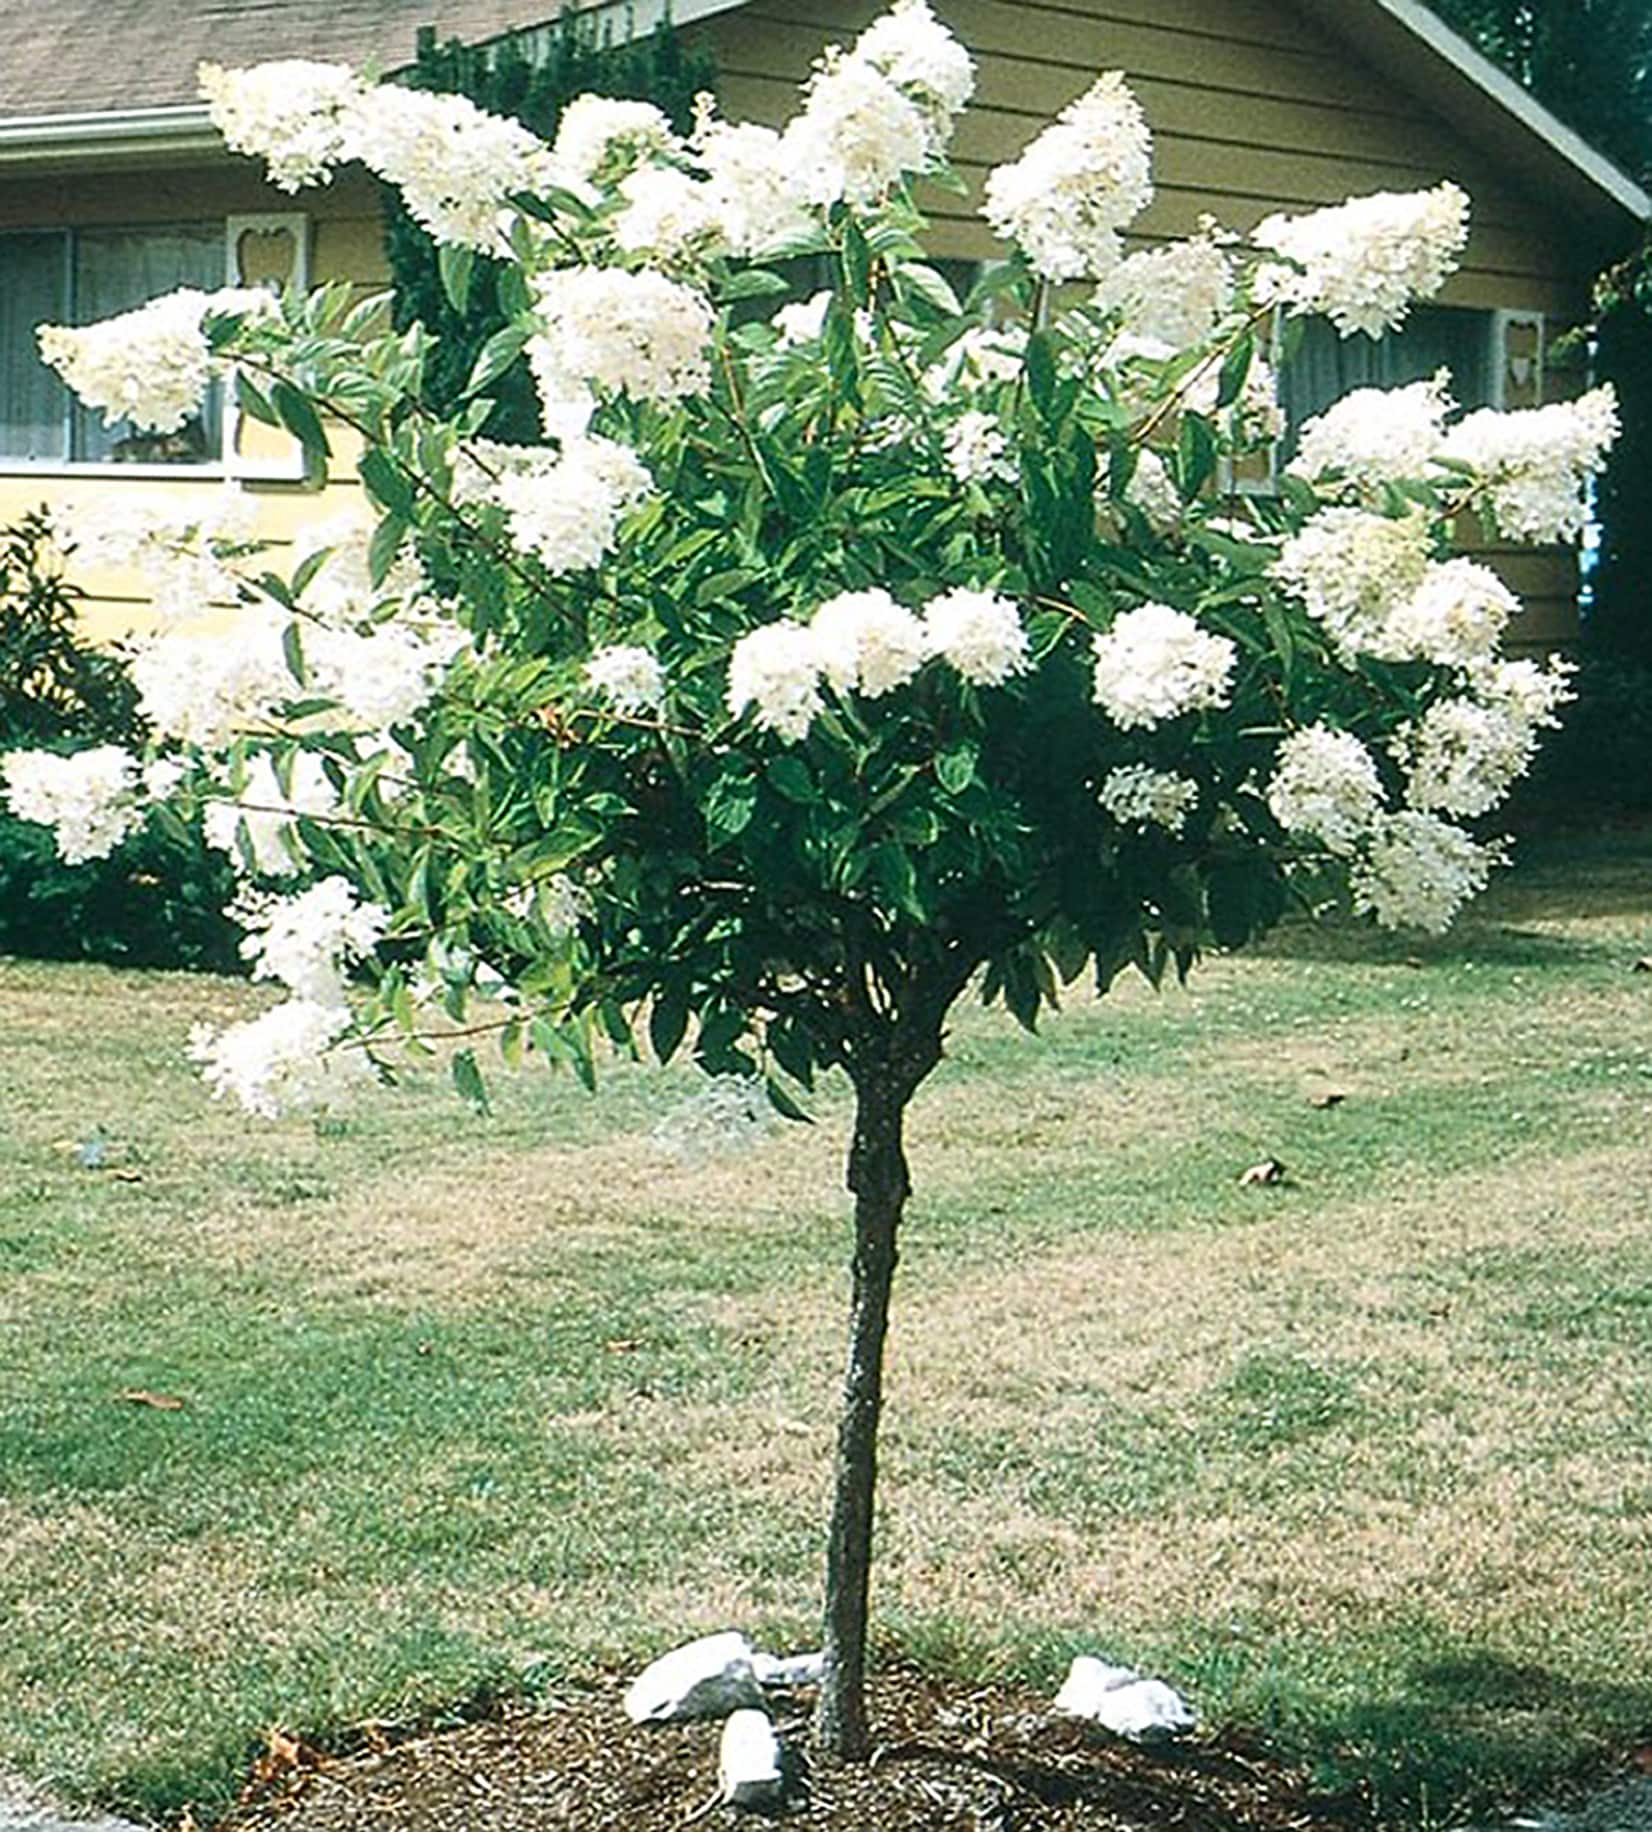 Image of White hydrangea tree in bloom